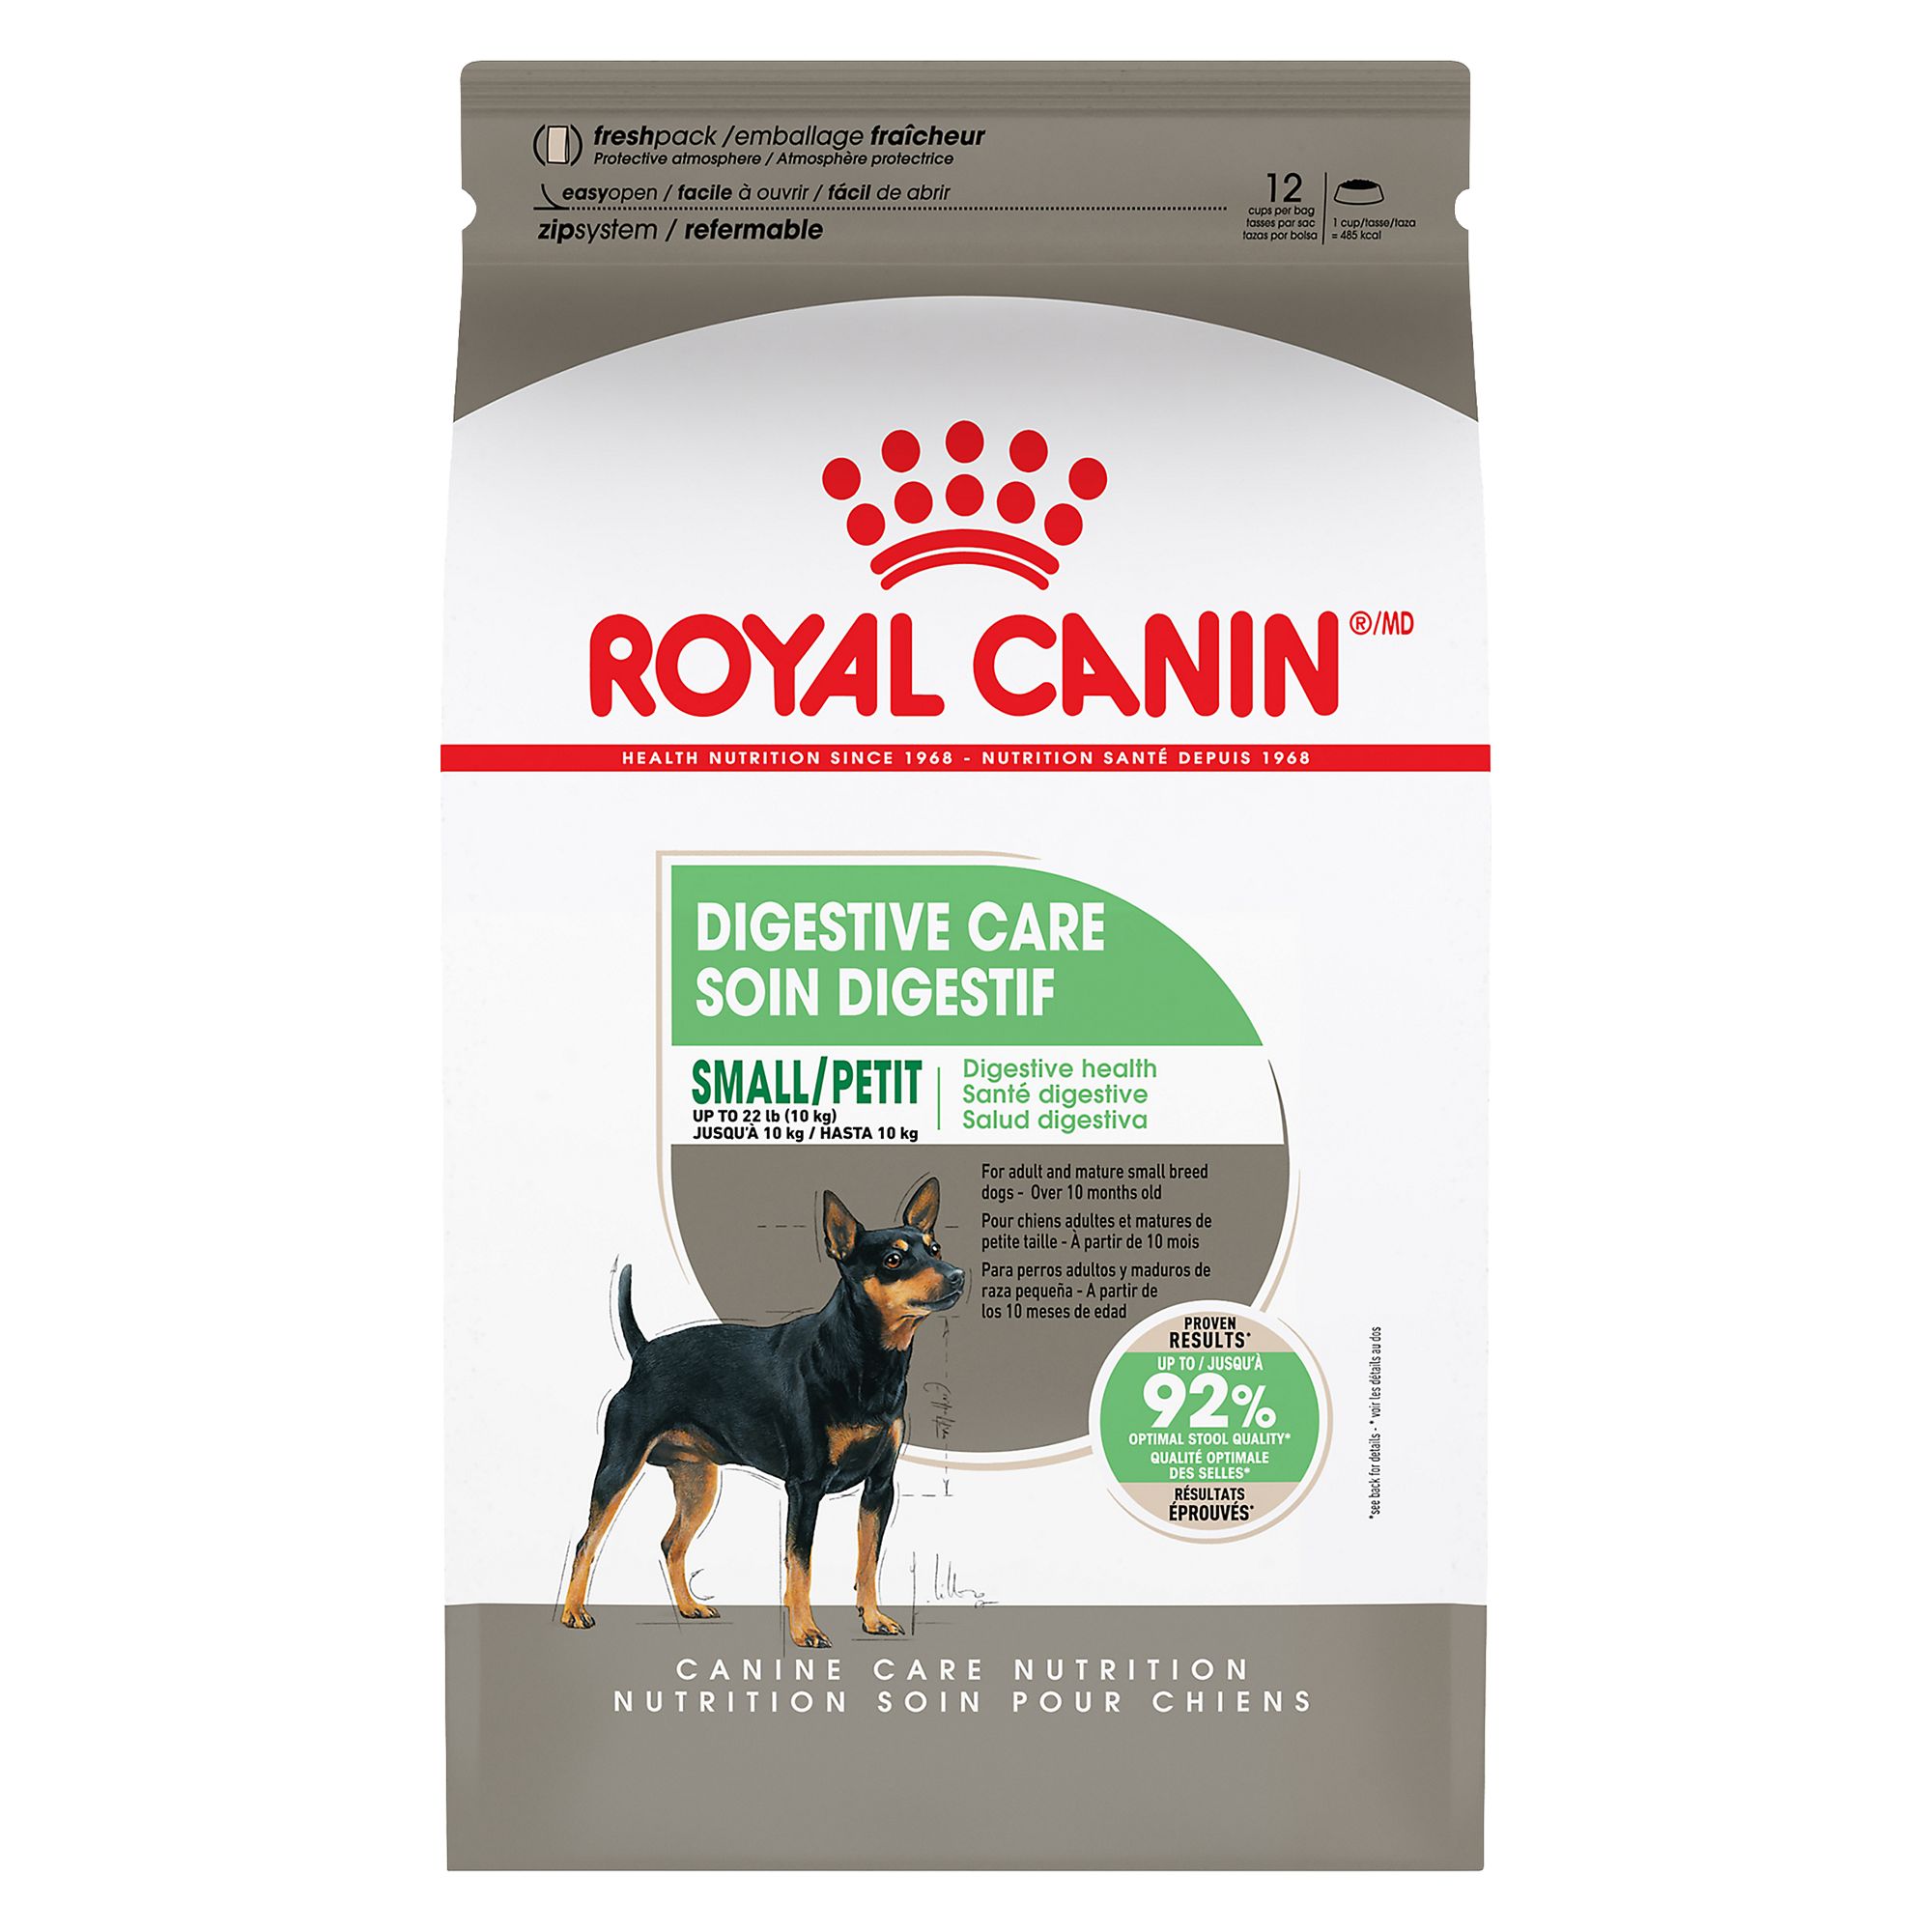 royal canin small dog food